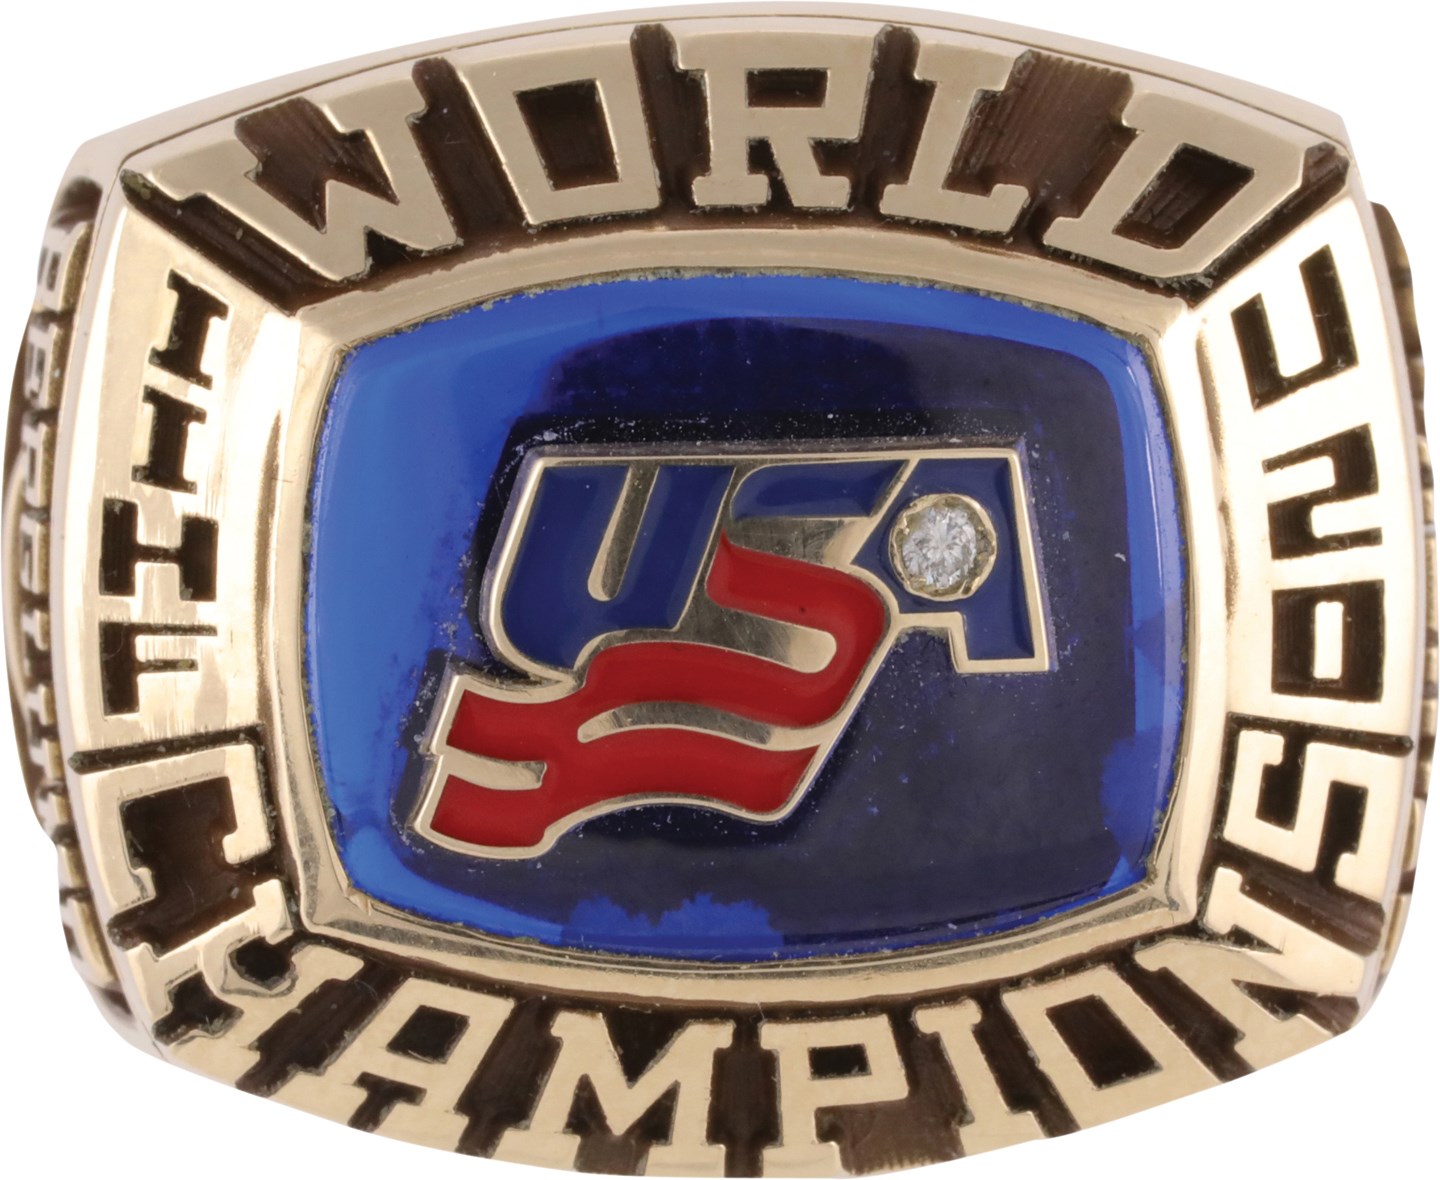 - 2004 Art Berglund Team USA U20 IIHF World Championship Ring w/Original Display Box